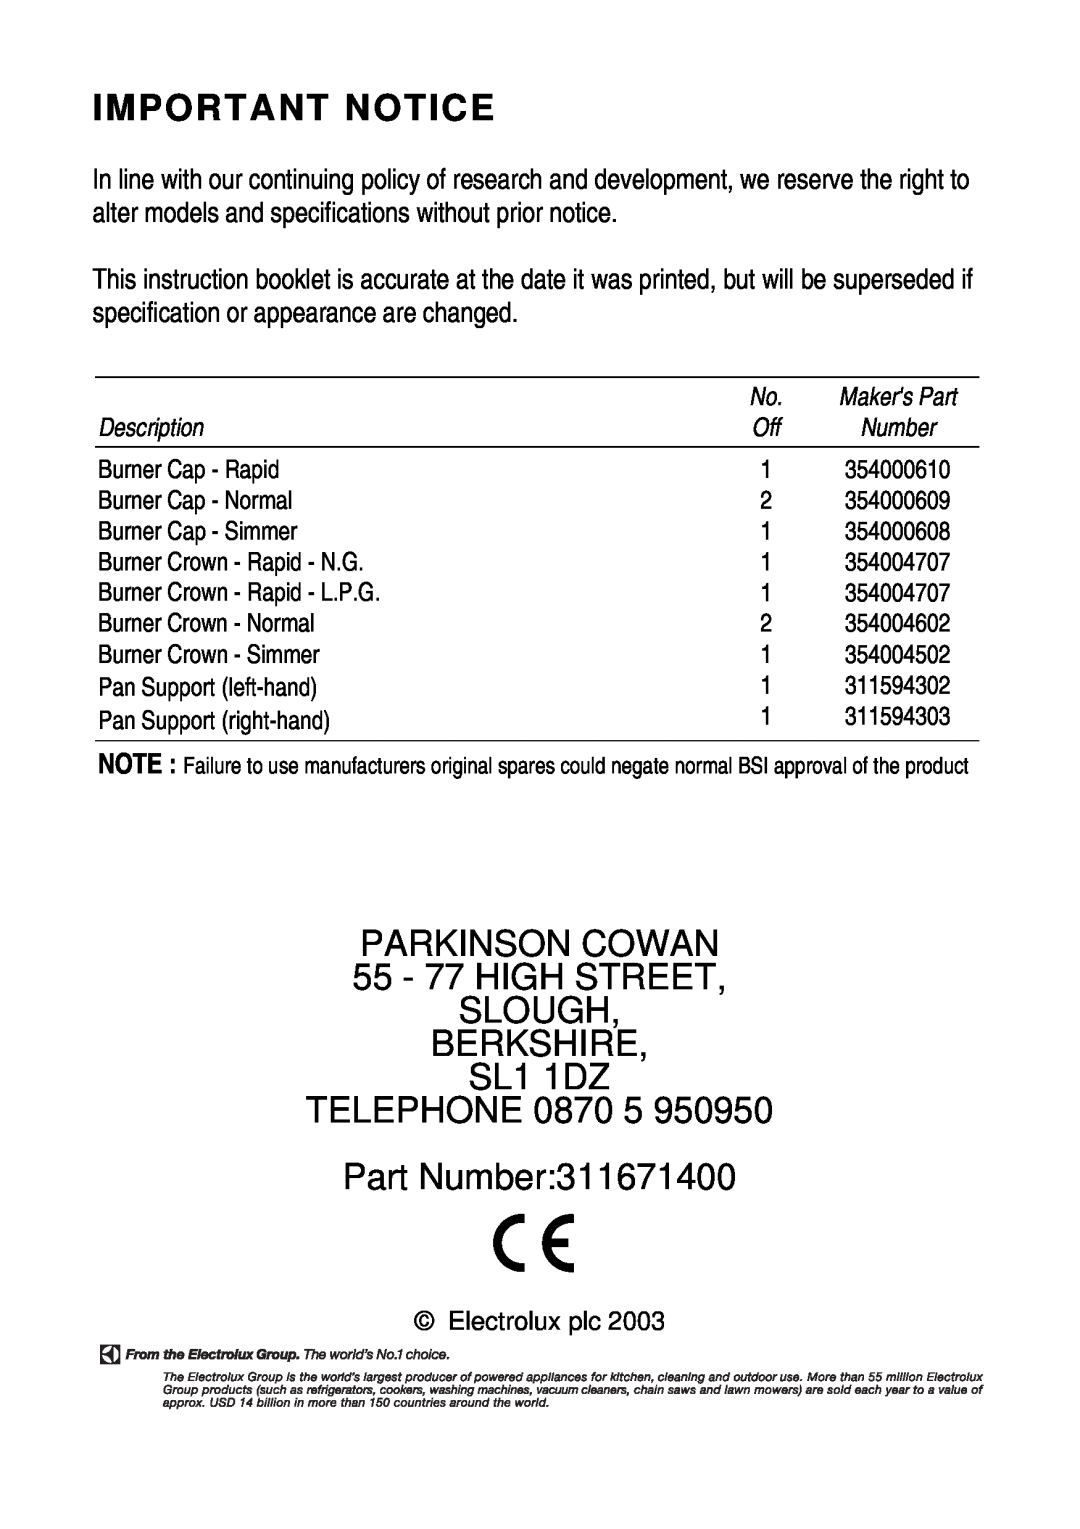 Electrolux SG 555 installation instructions Important Notice, PARKINSON COWAN 55 - 77 HIGH STREET SLOUGH BERKSHIRE SL1 1DZ 